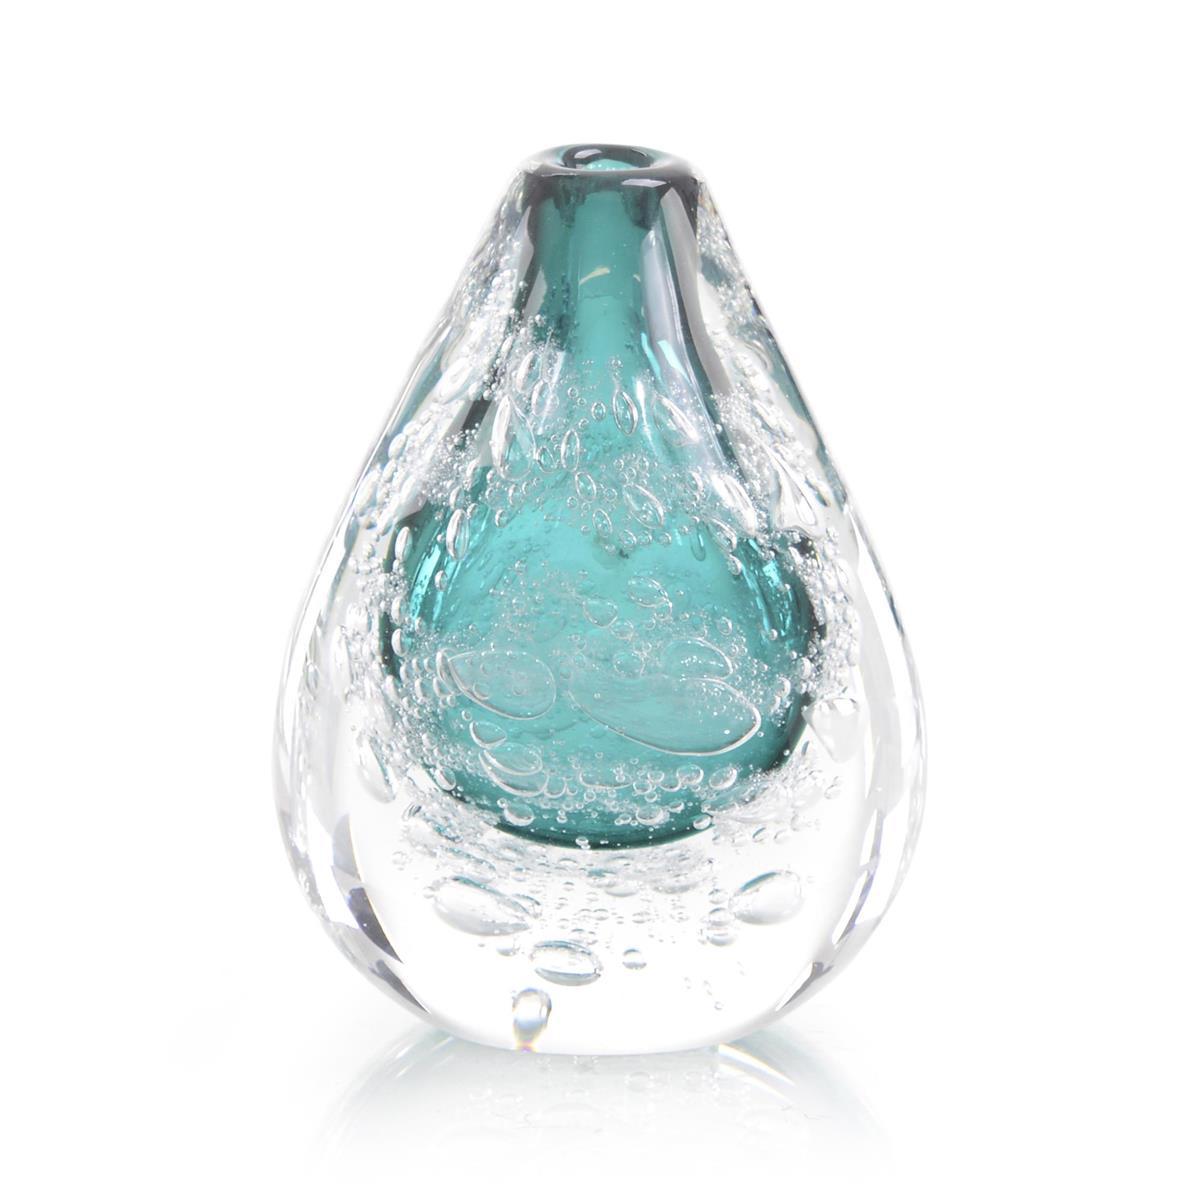 Azure Art Glass Vase with Bubbles-John Richard-Vases-Artistic Elements